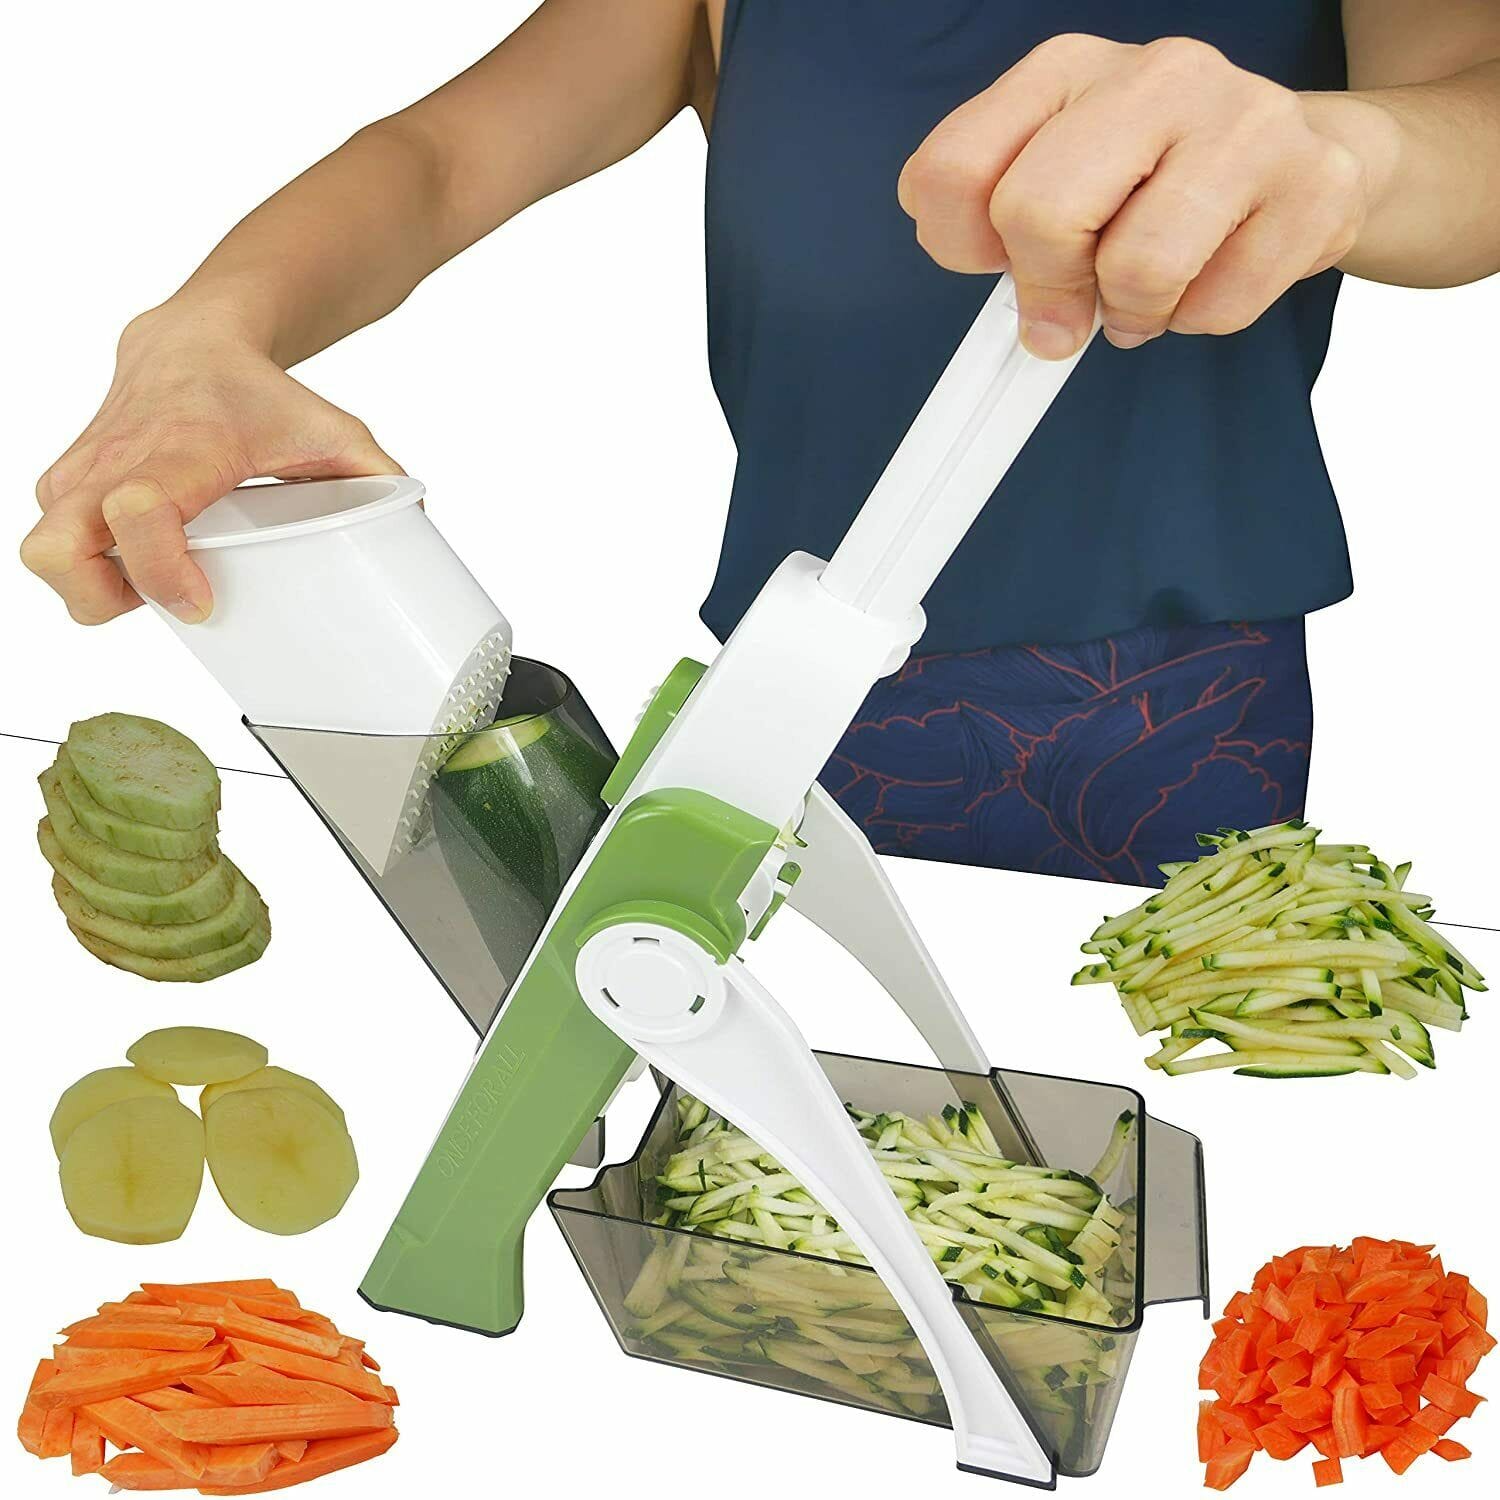 4 In 1 Vegetable Cutter Chopper Adjustable Multi-function Vegetable Cutter Kitchen Shredder Grater Artifact